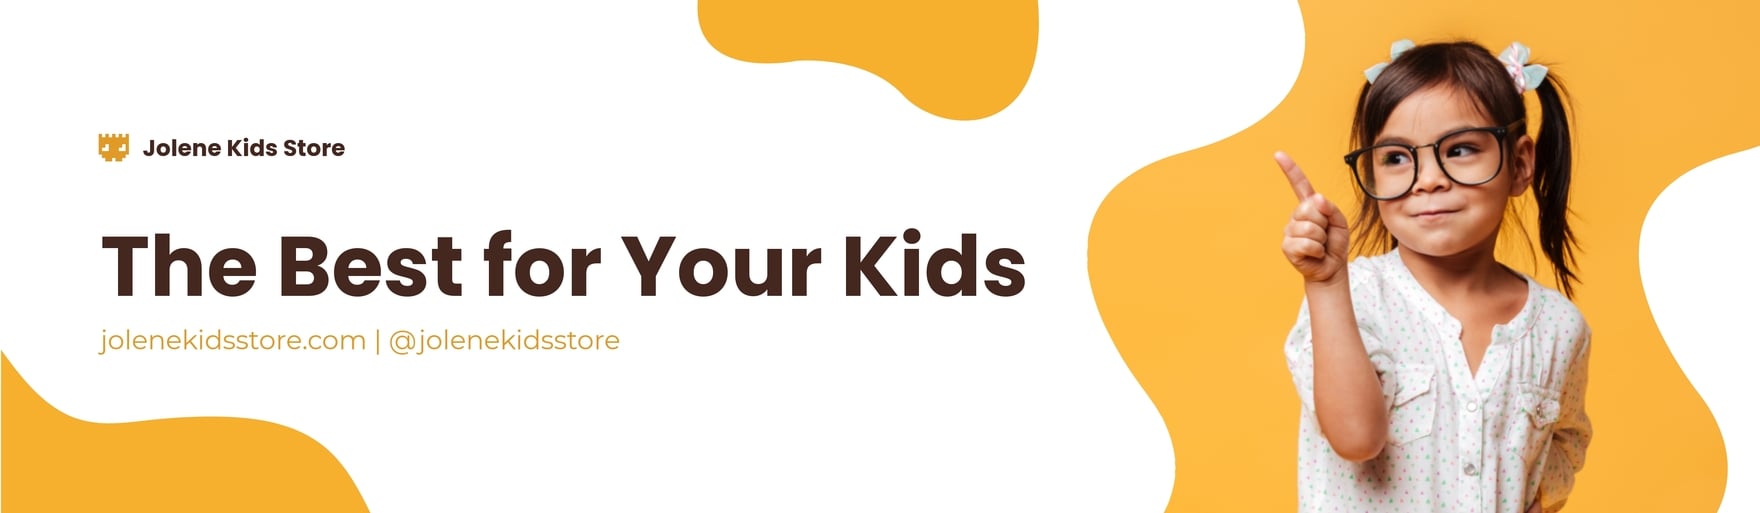 Kids Store Billboard Template